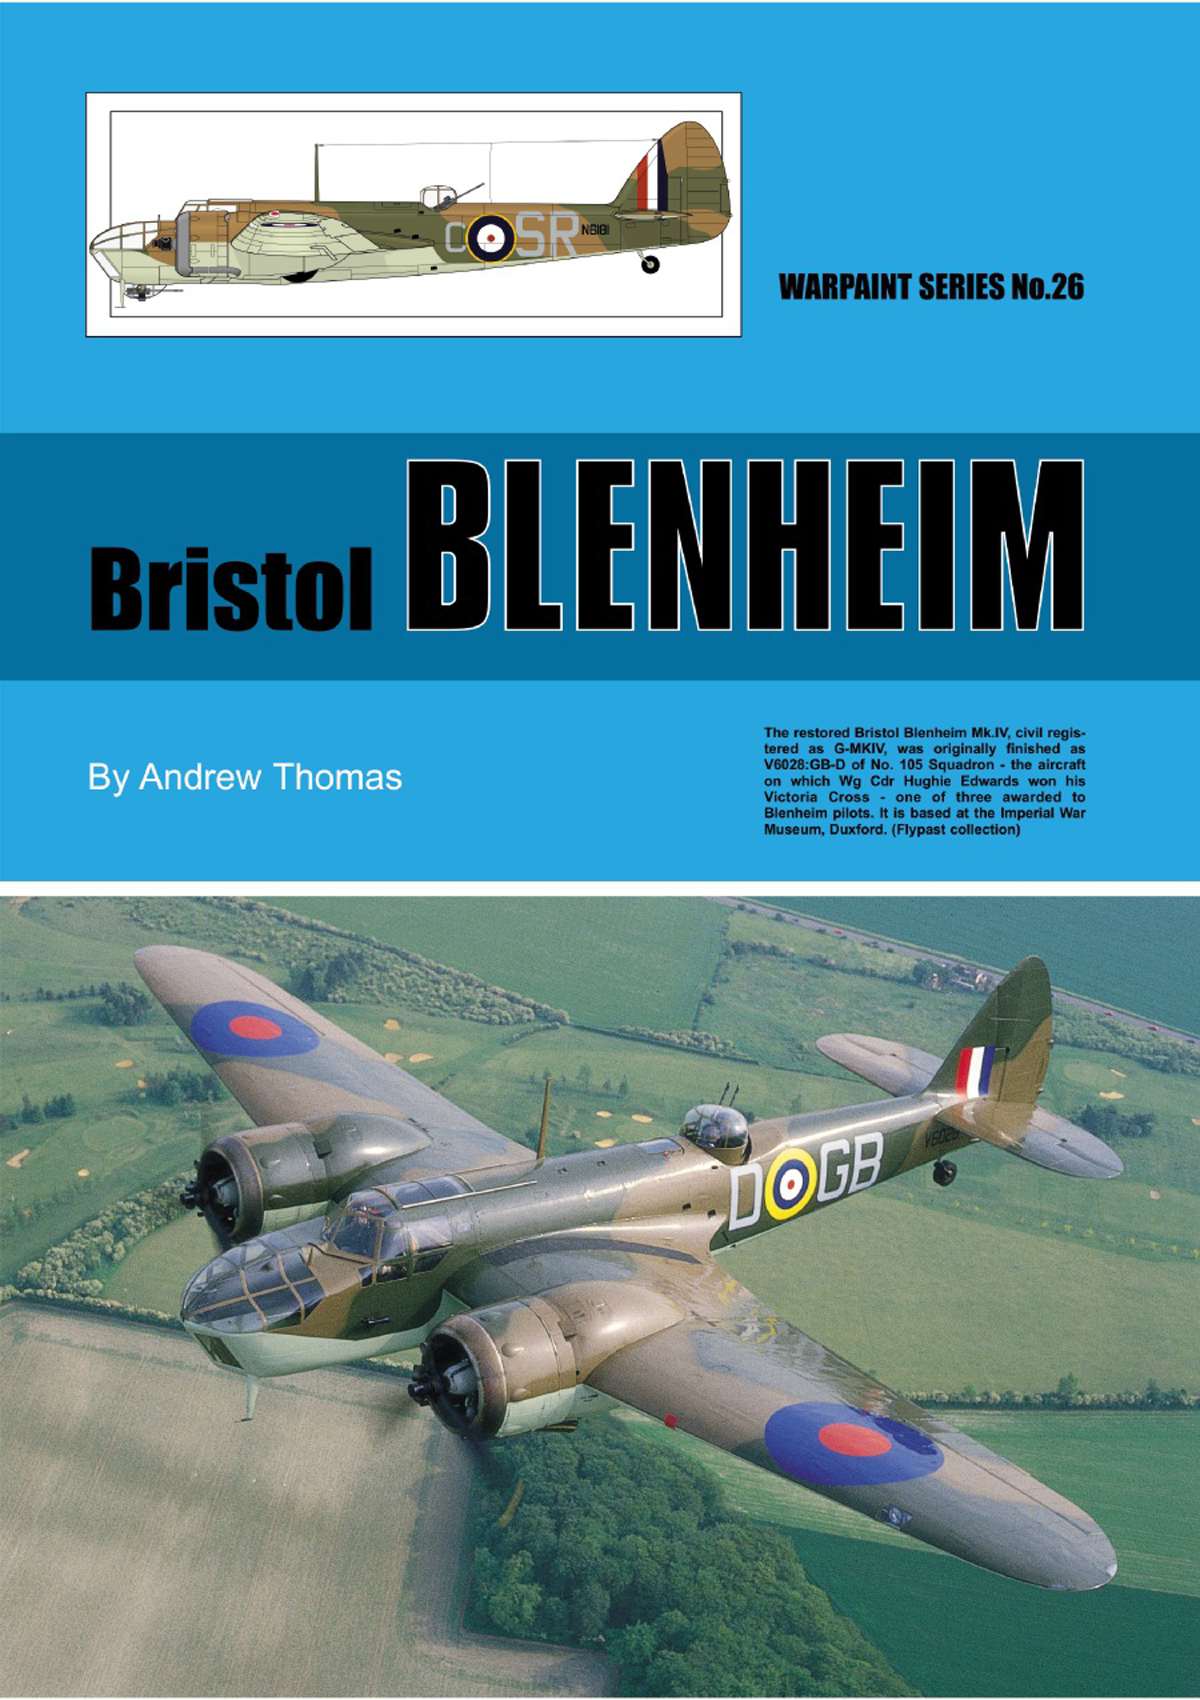 N26 - Bristol Blenheim